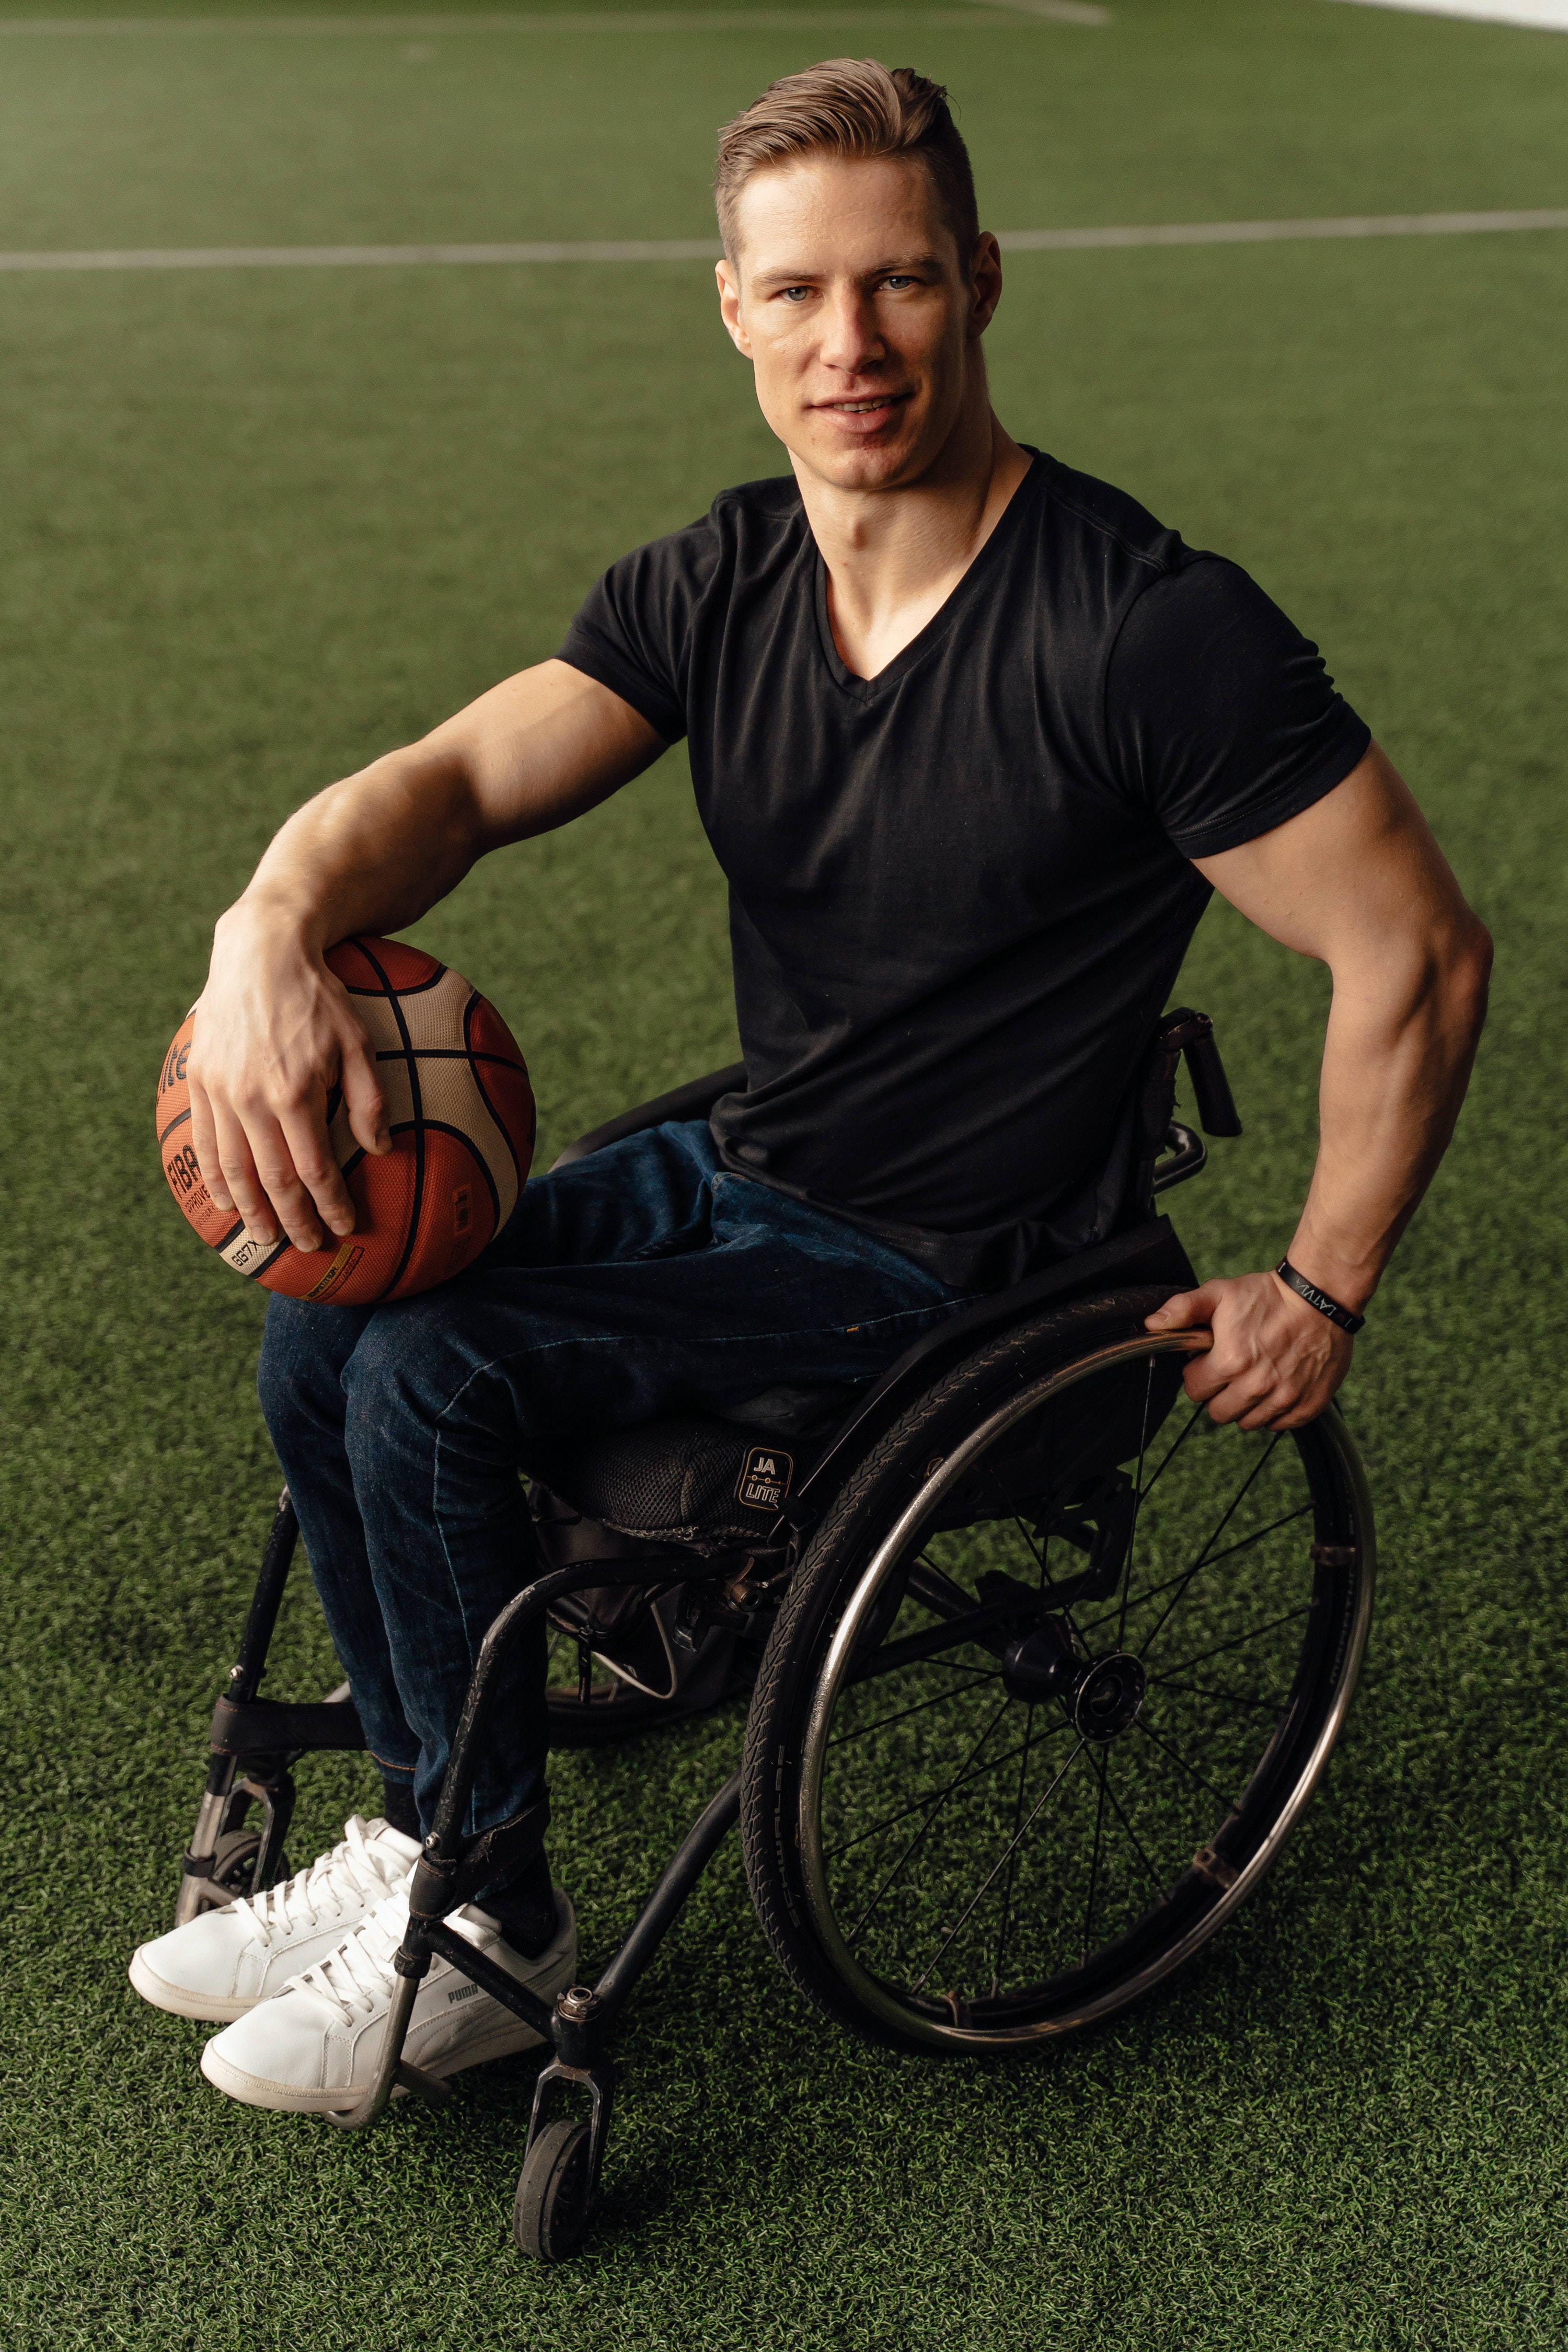 Chico en silla de ruedas sujetando un balón de baloncesto